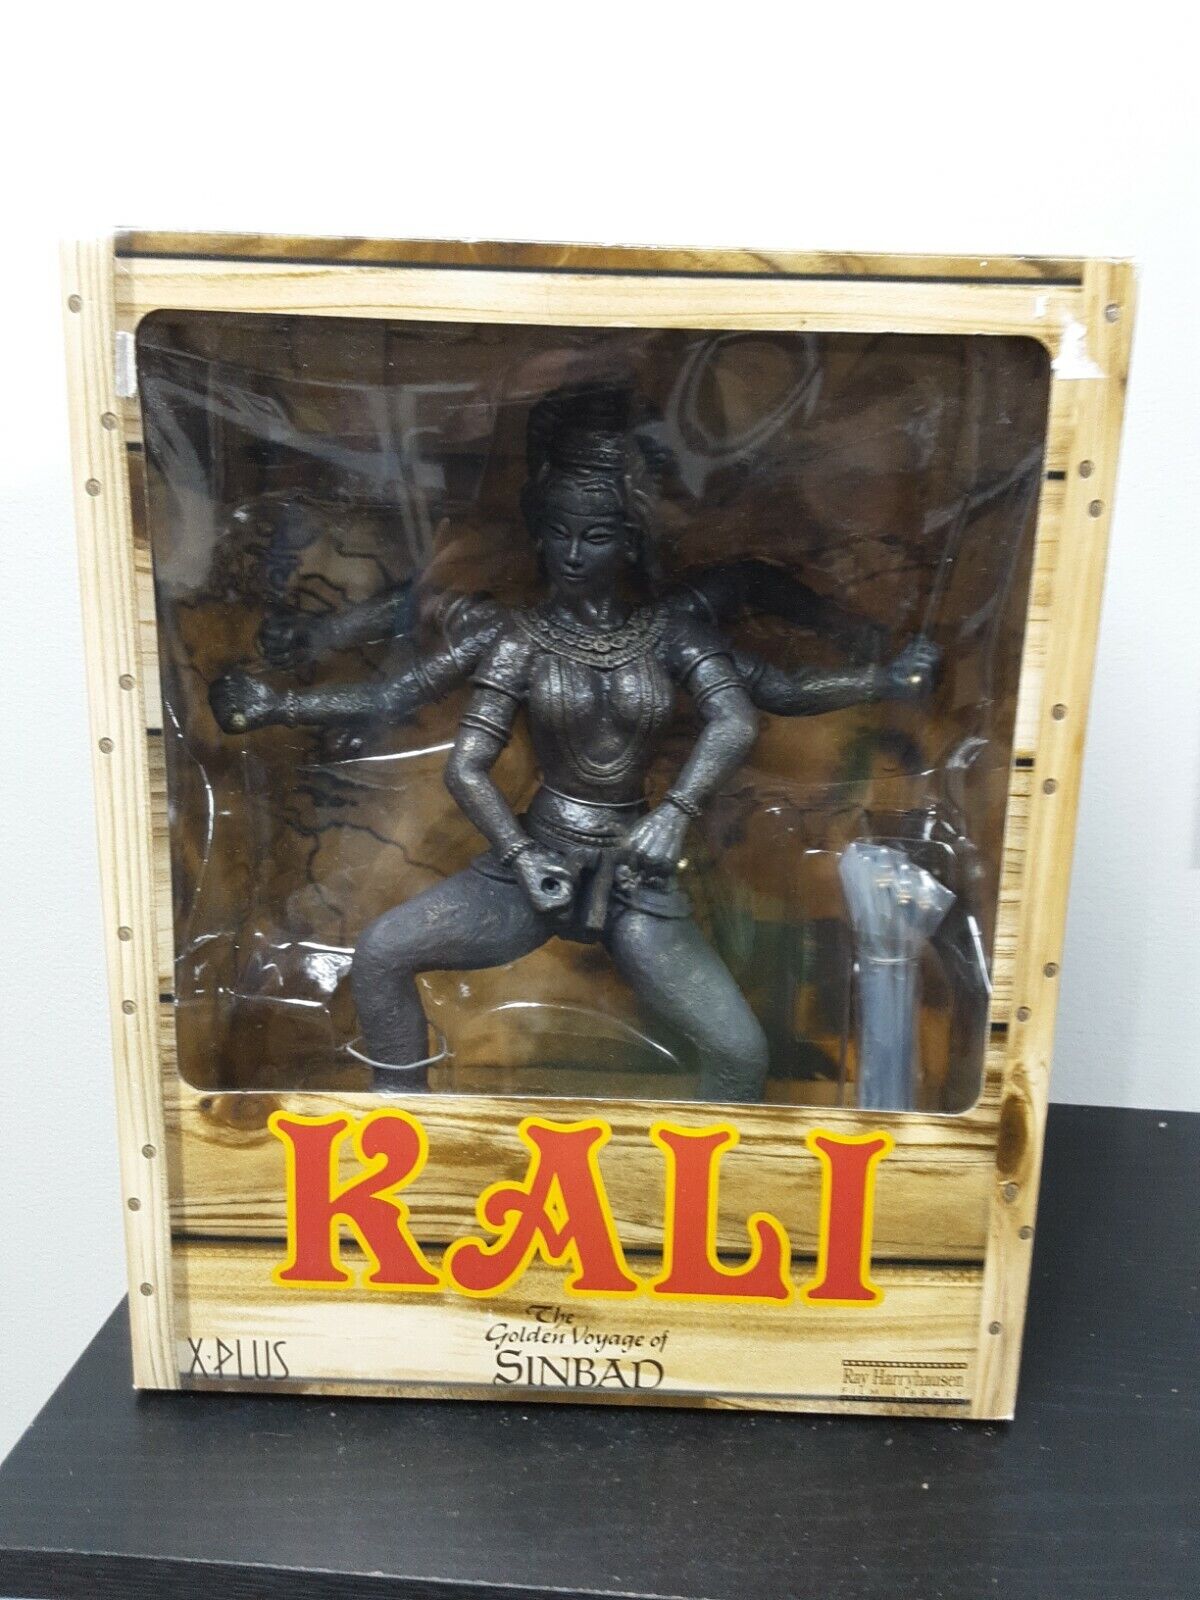 X-Plus KALI Jumbo figure 12\'\'  The Golden Voyage of Sinbad - New in box 